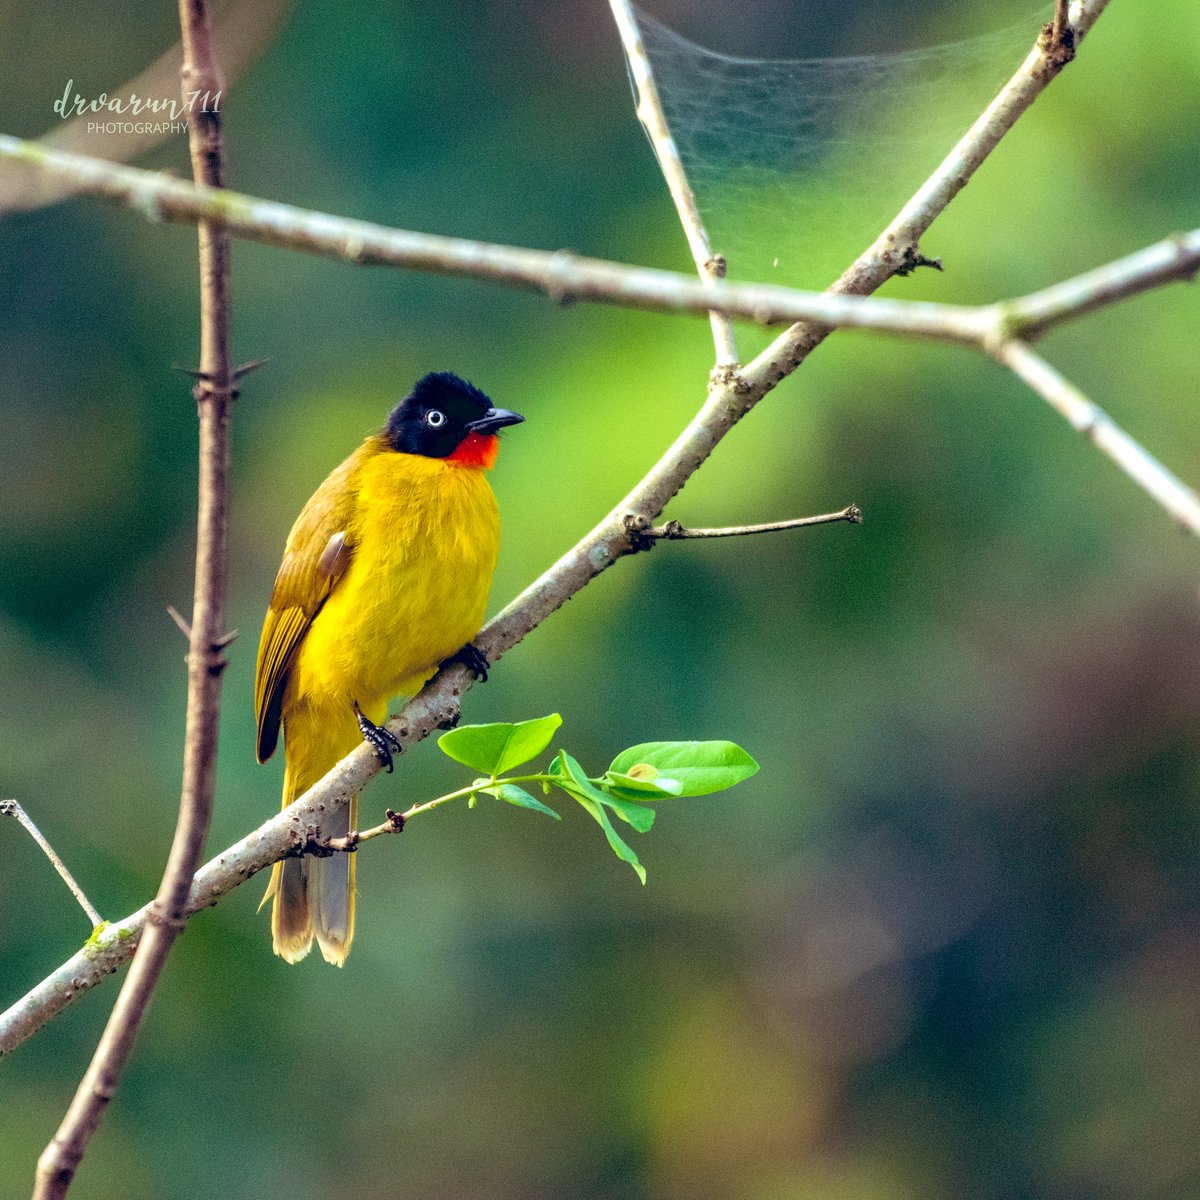 Natural frame captured ◀️😋
#IndiAves #birdwatching @NatGeoIndia #birding #BirDereceHak #Nikon 
#TwitterNatureCommunity #birdsphotography #BirdsOfTwitter #BirdTwitter @NatGeoPhotos #NaturePhotograhpy
#ThePhotoHour @DEFCCOfficial @BNHSIndia
Flame-throated bulbul